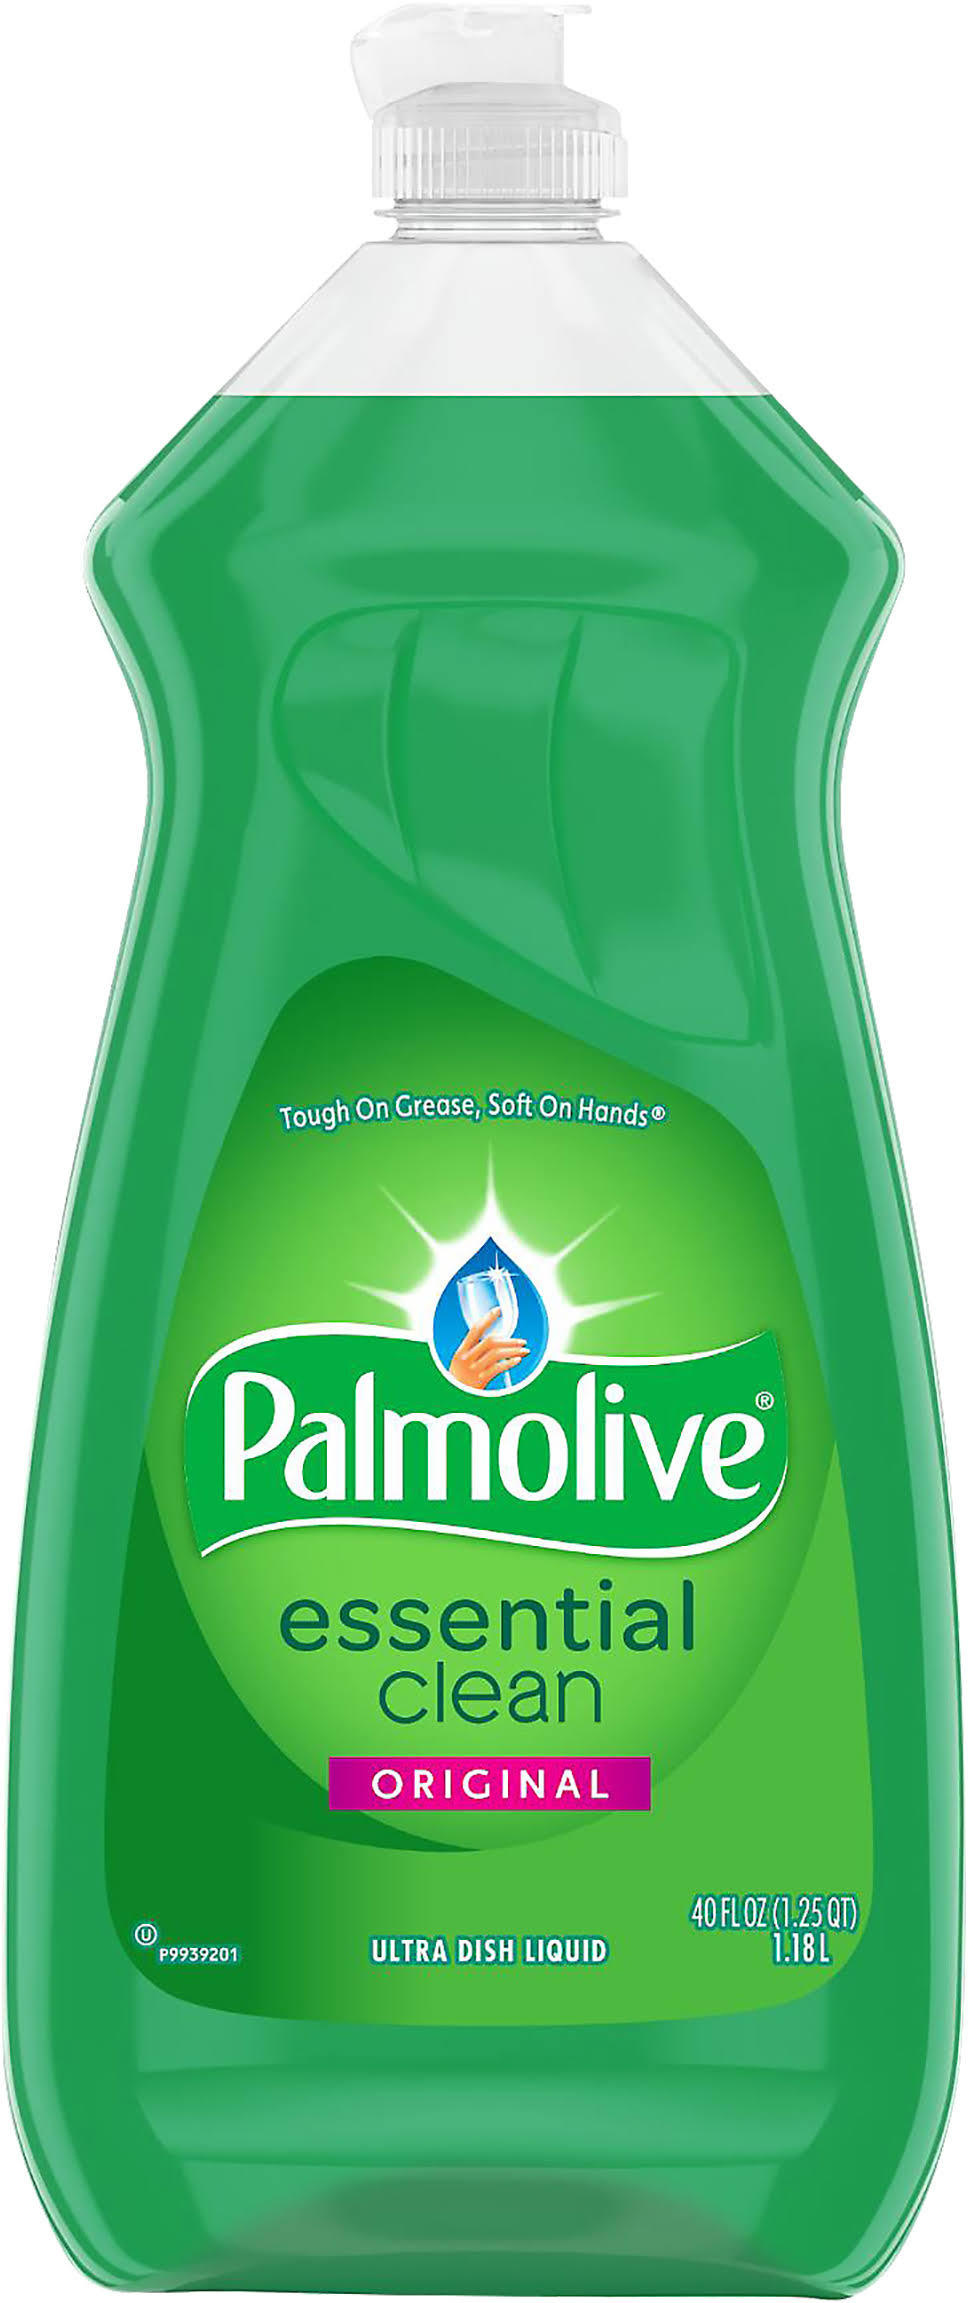 Palmolive Essential Clean Liquid Dish Soap, Original Scent - 4.27 L